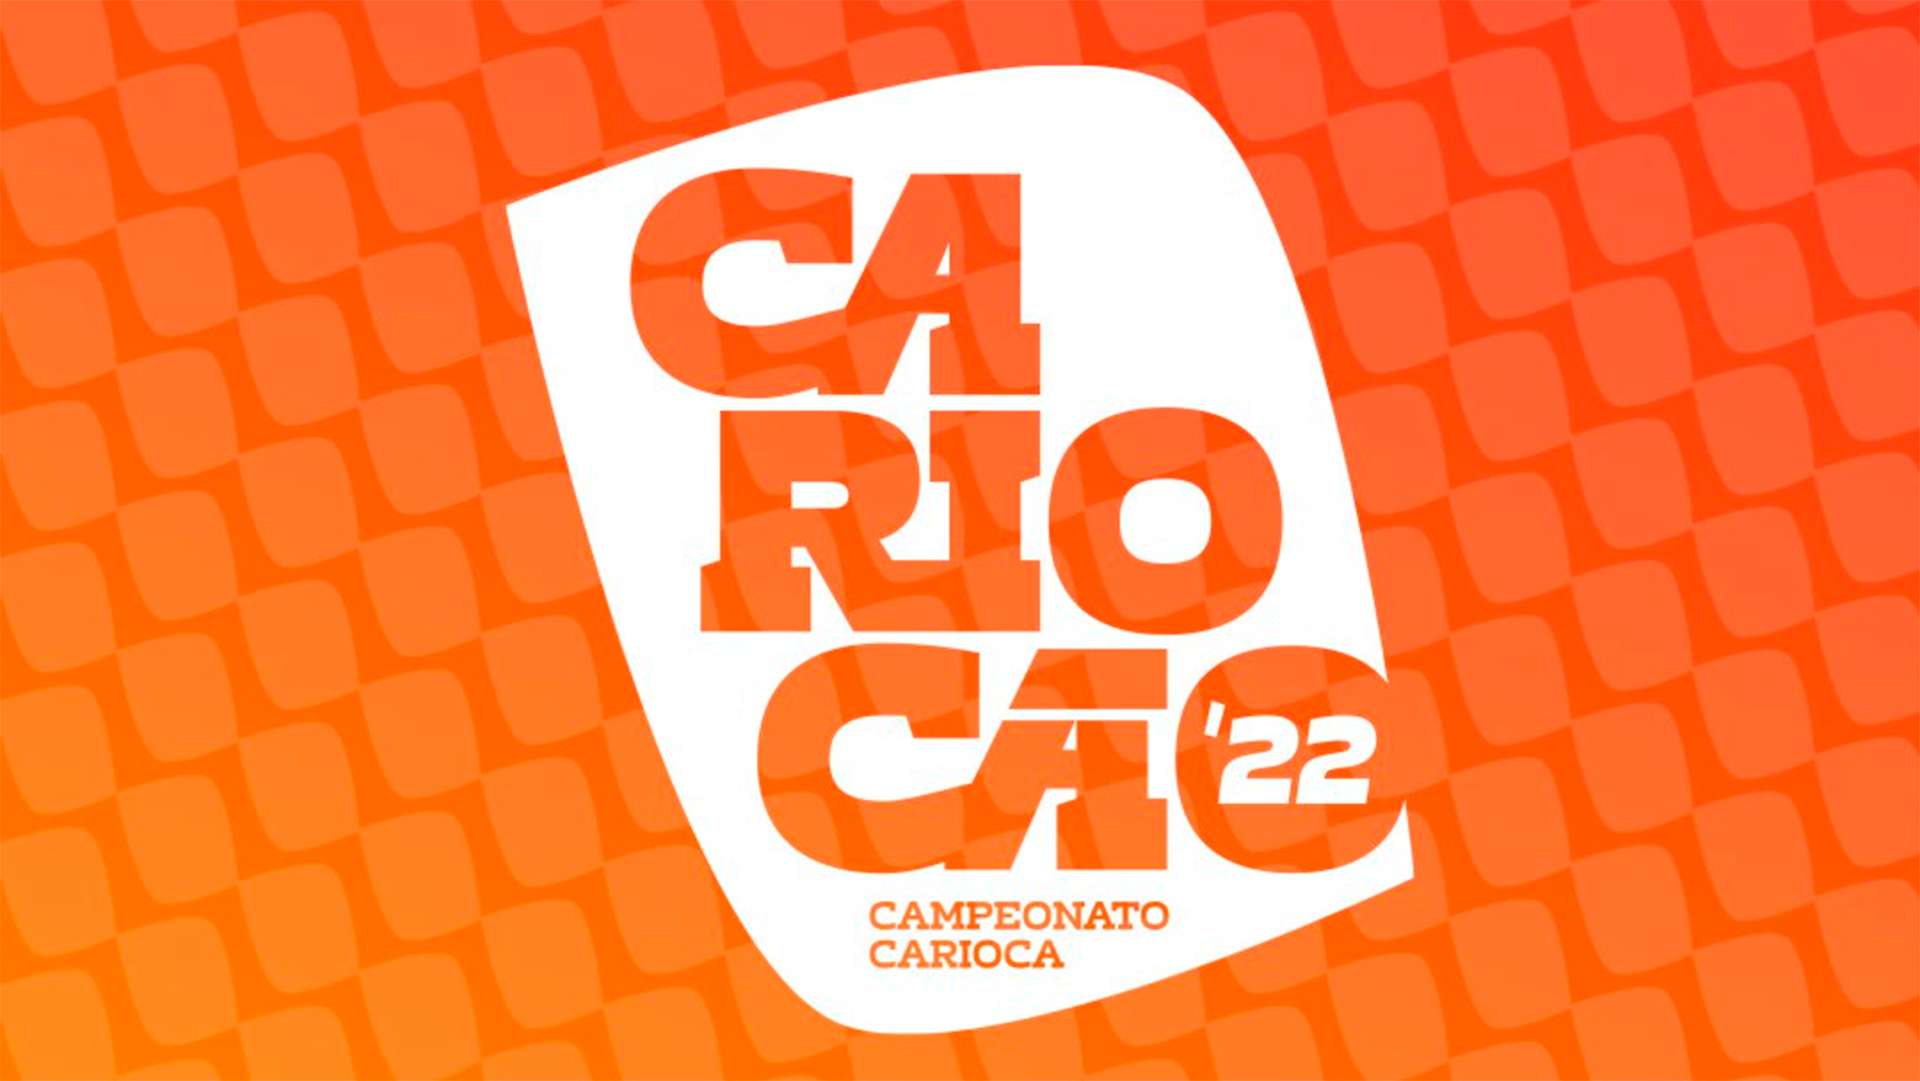 Campeonato Carioca 2022 logo